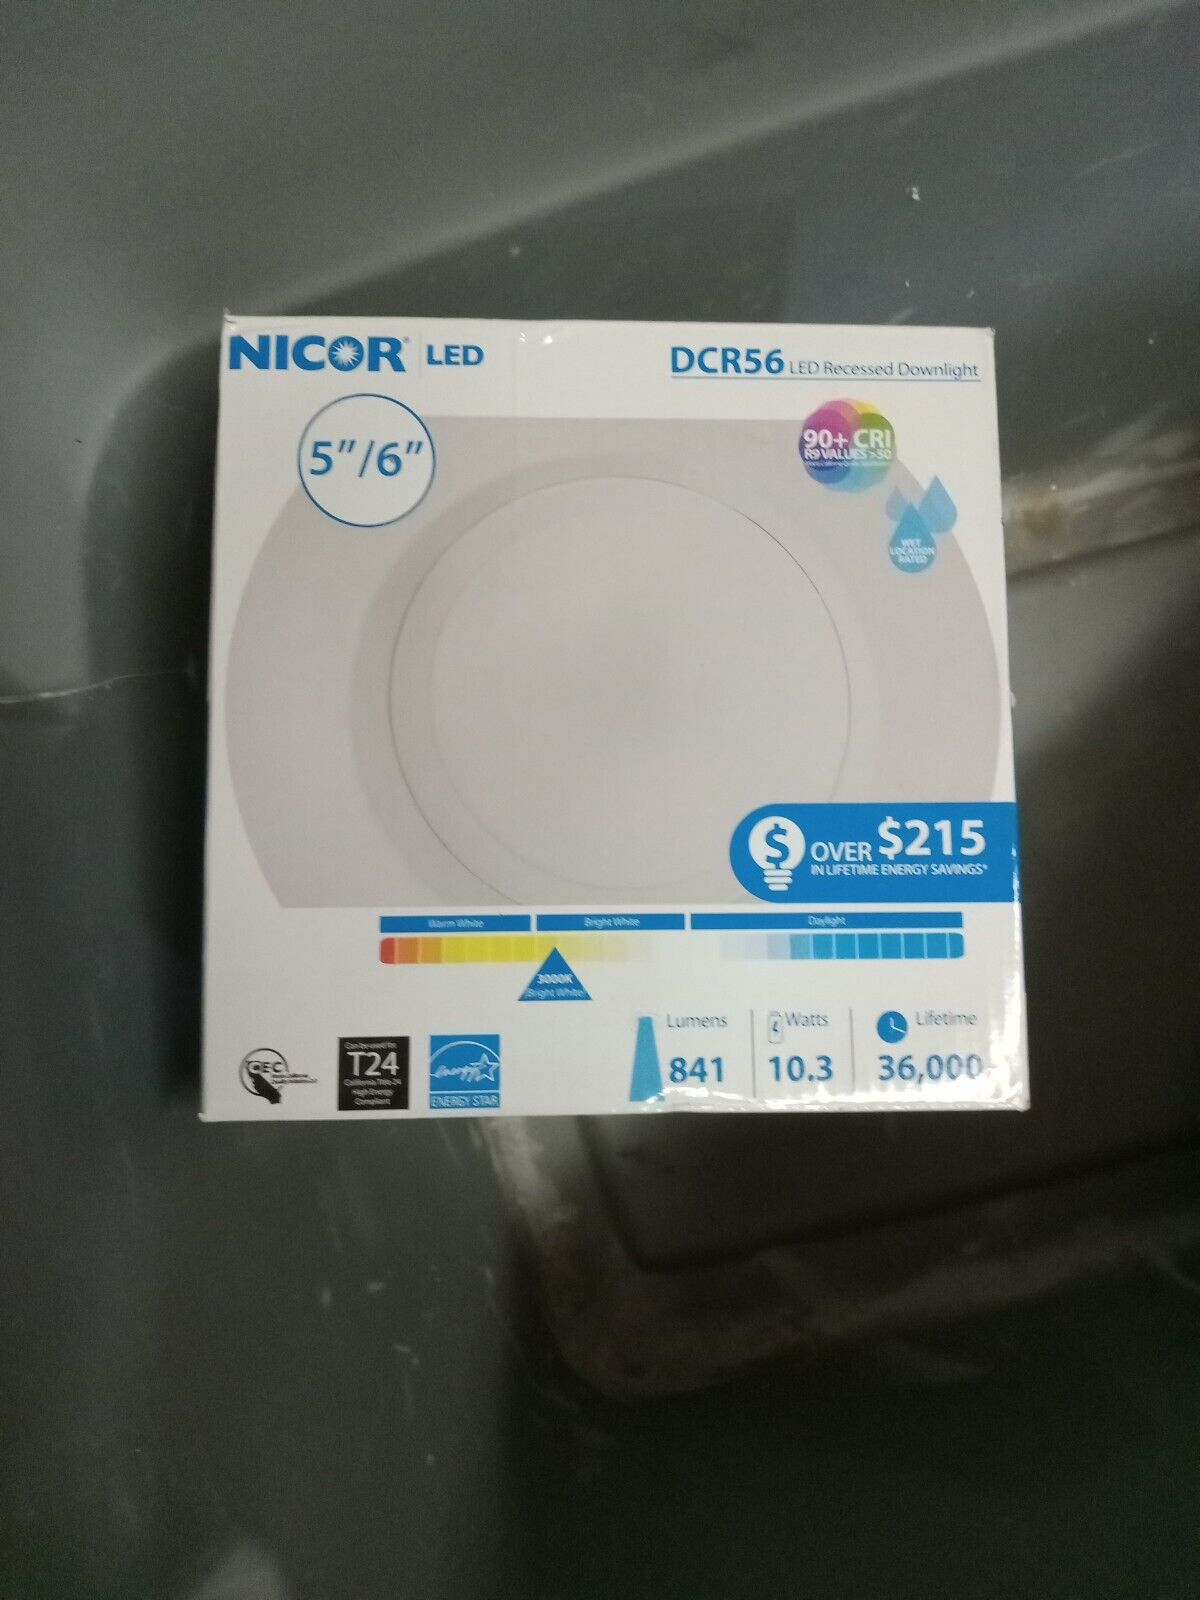 Nicor LED DCR56 Recessed Downlight 10.3 Watts 5/6 Inch